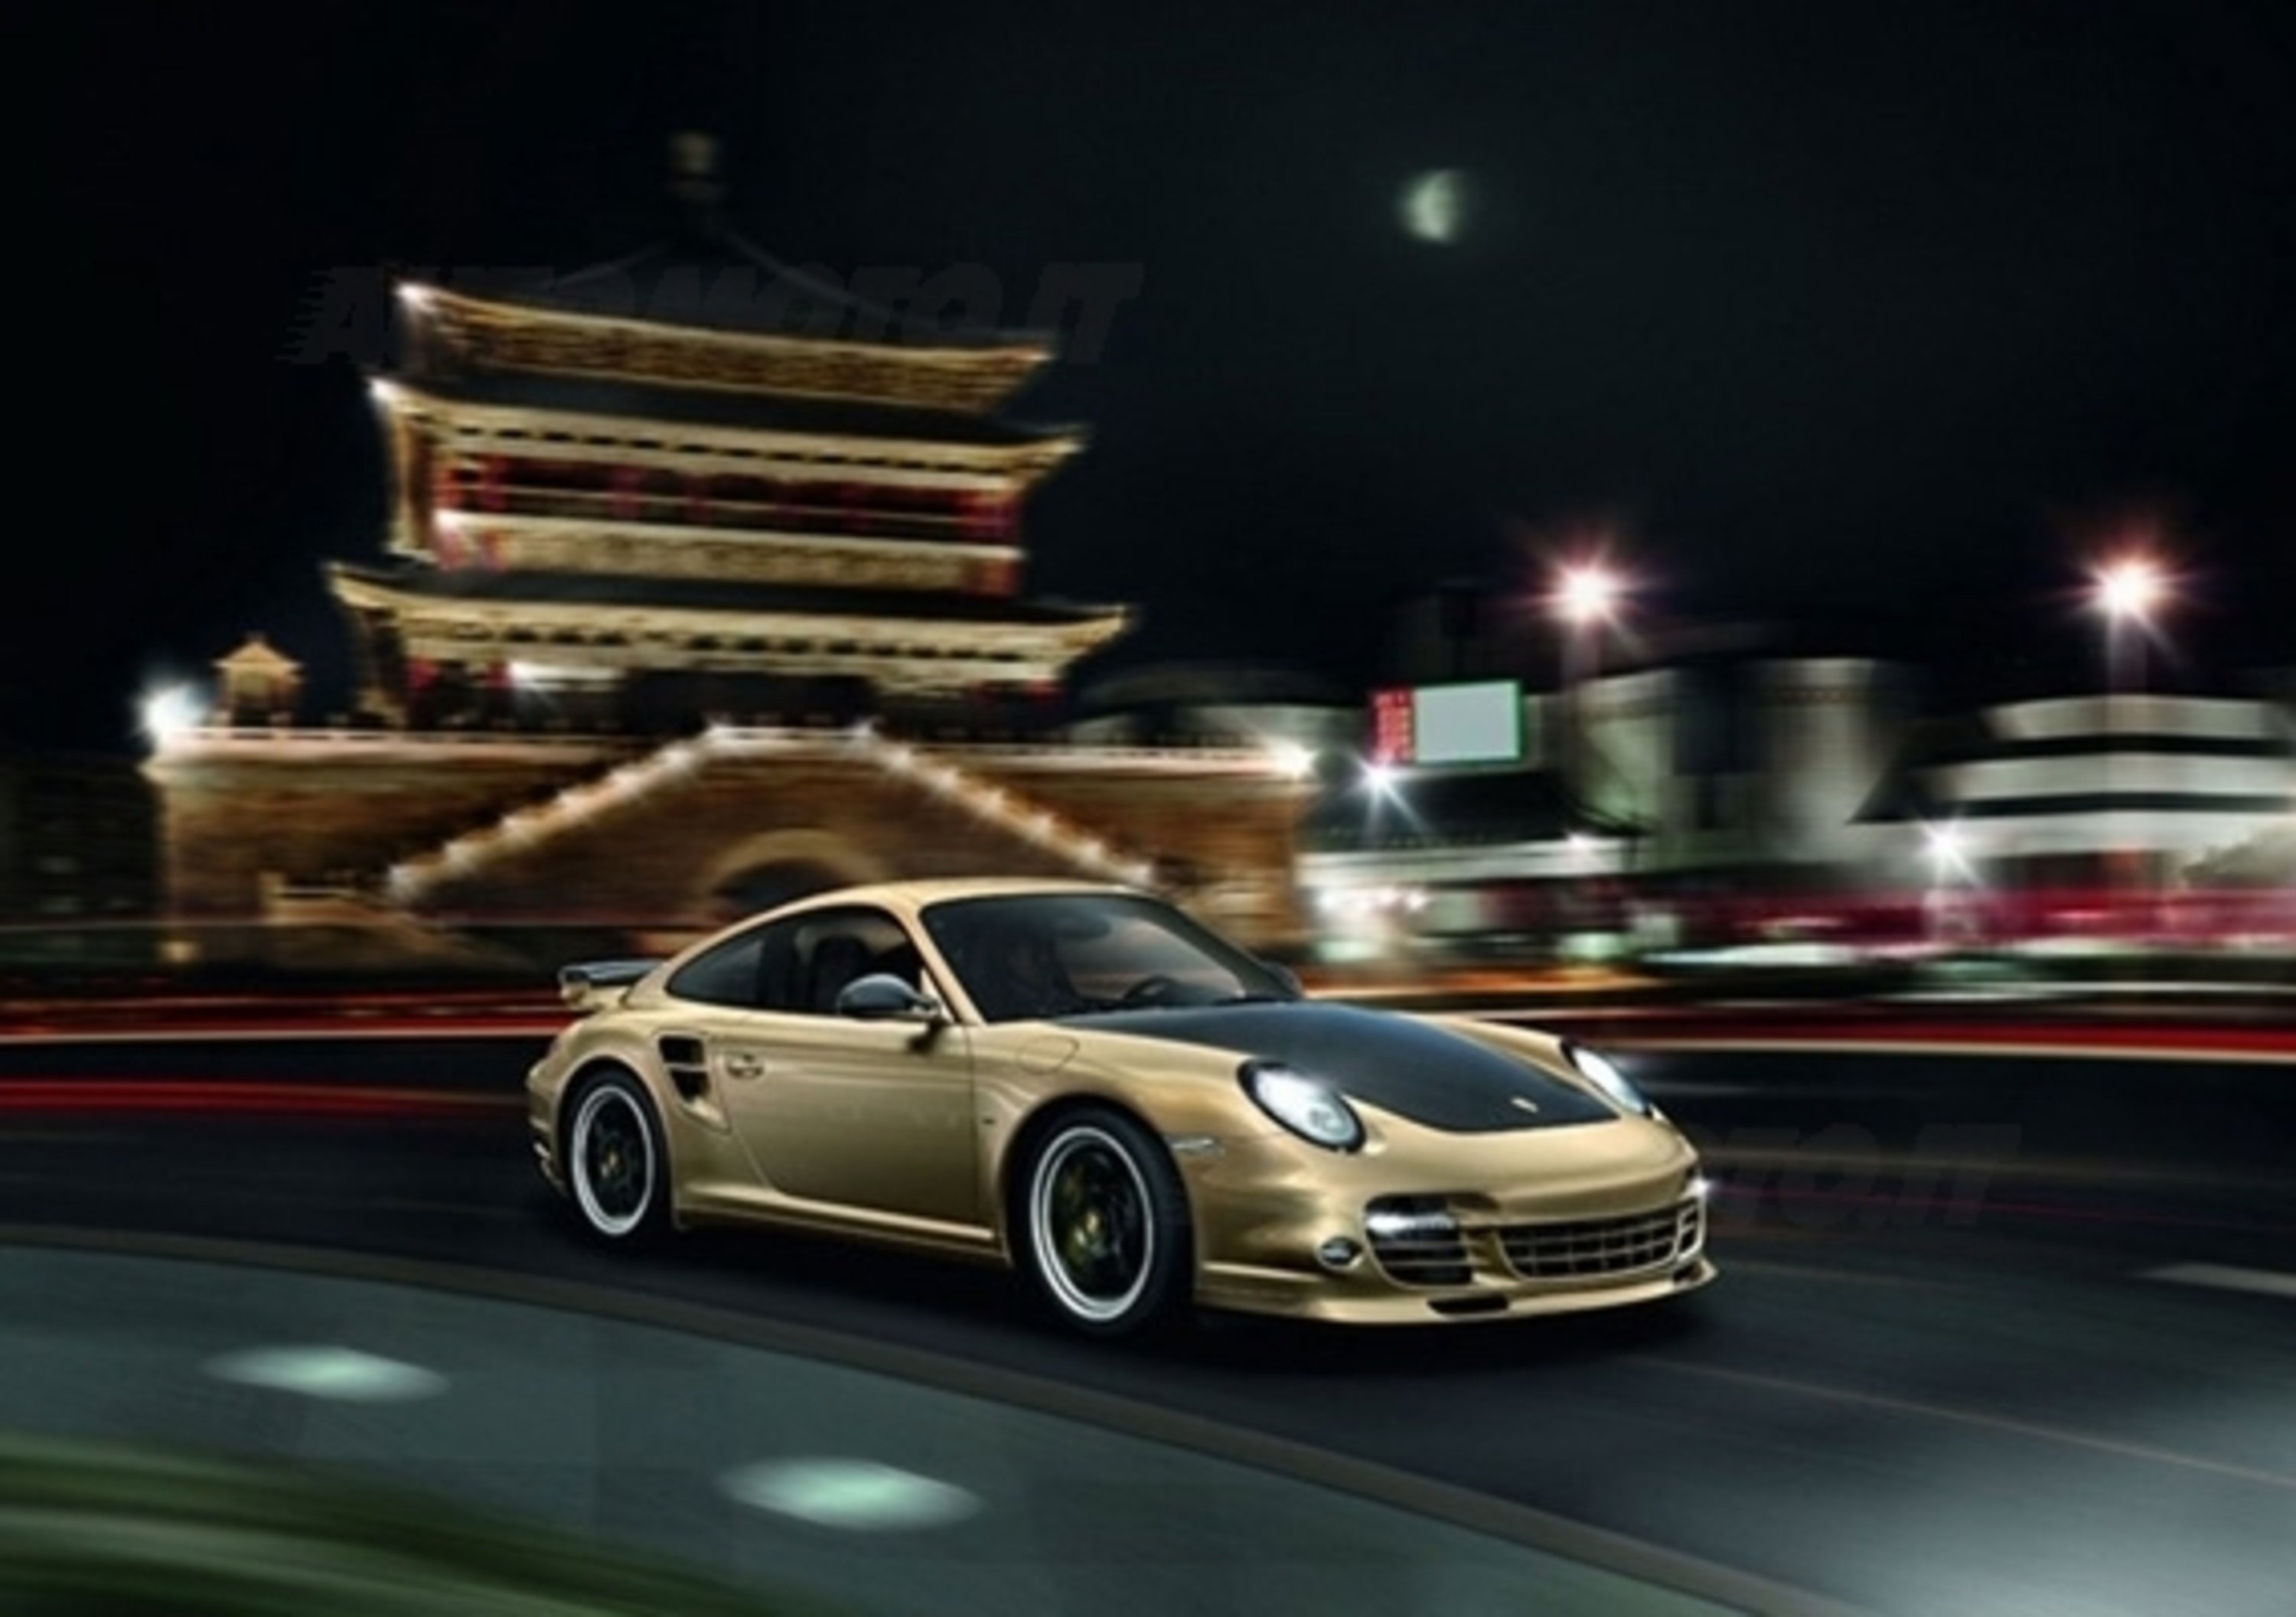 Porsche 911 Turbo S 10 Year Anniversary Edition